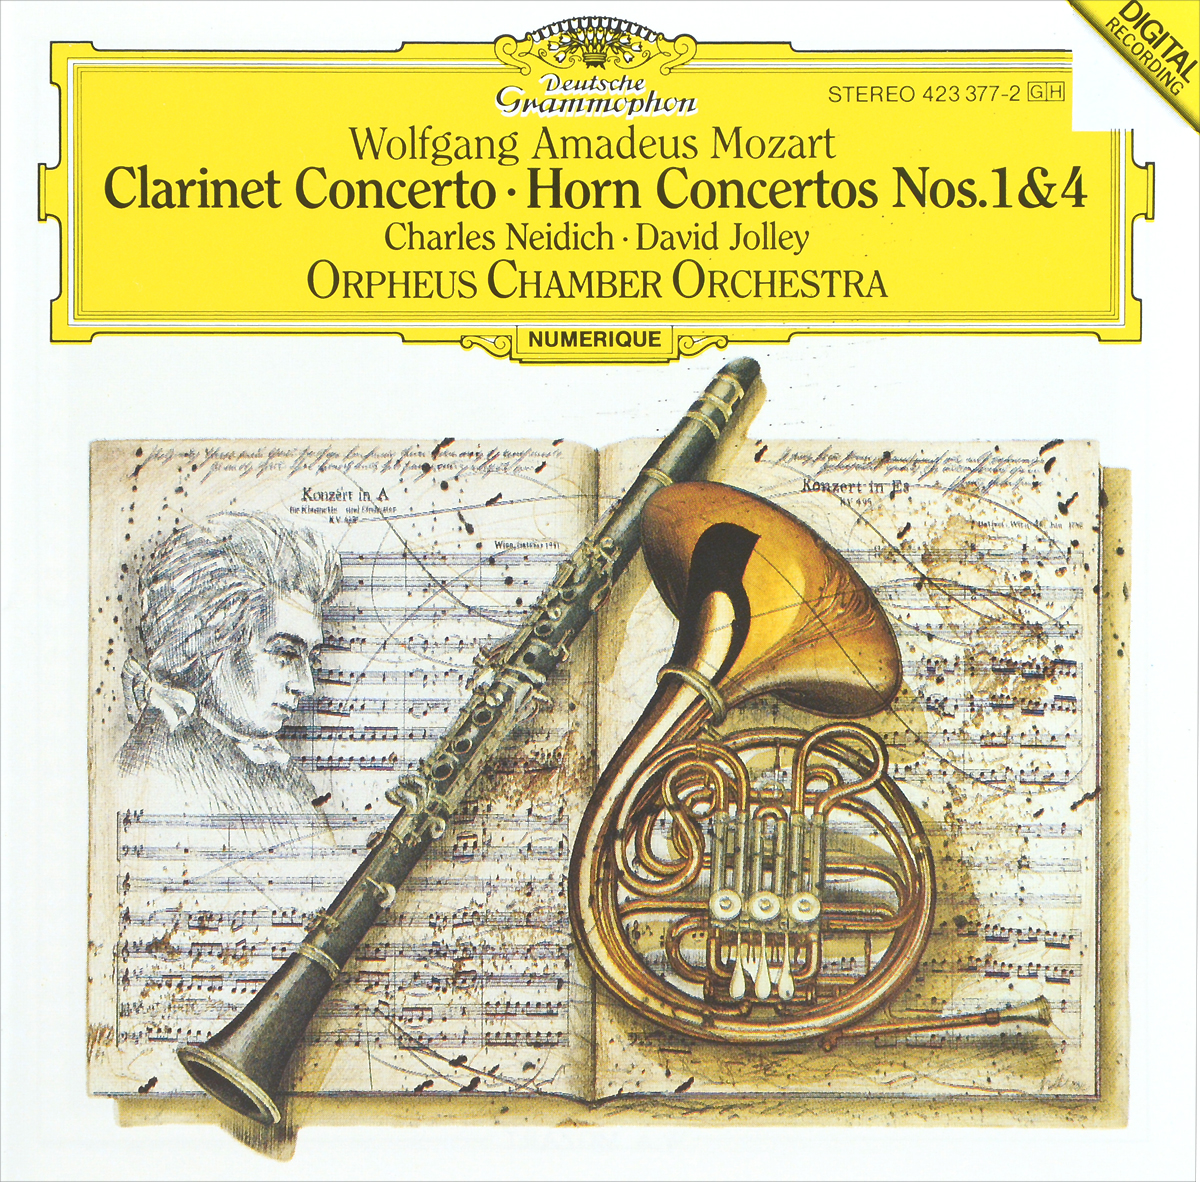 Charles Neidich. David Jolley. Wolfgang Amadeus Mozart. Clarinet Concerto / Horn Concertos Nos. 1 & 4